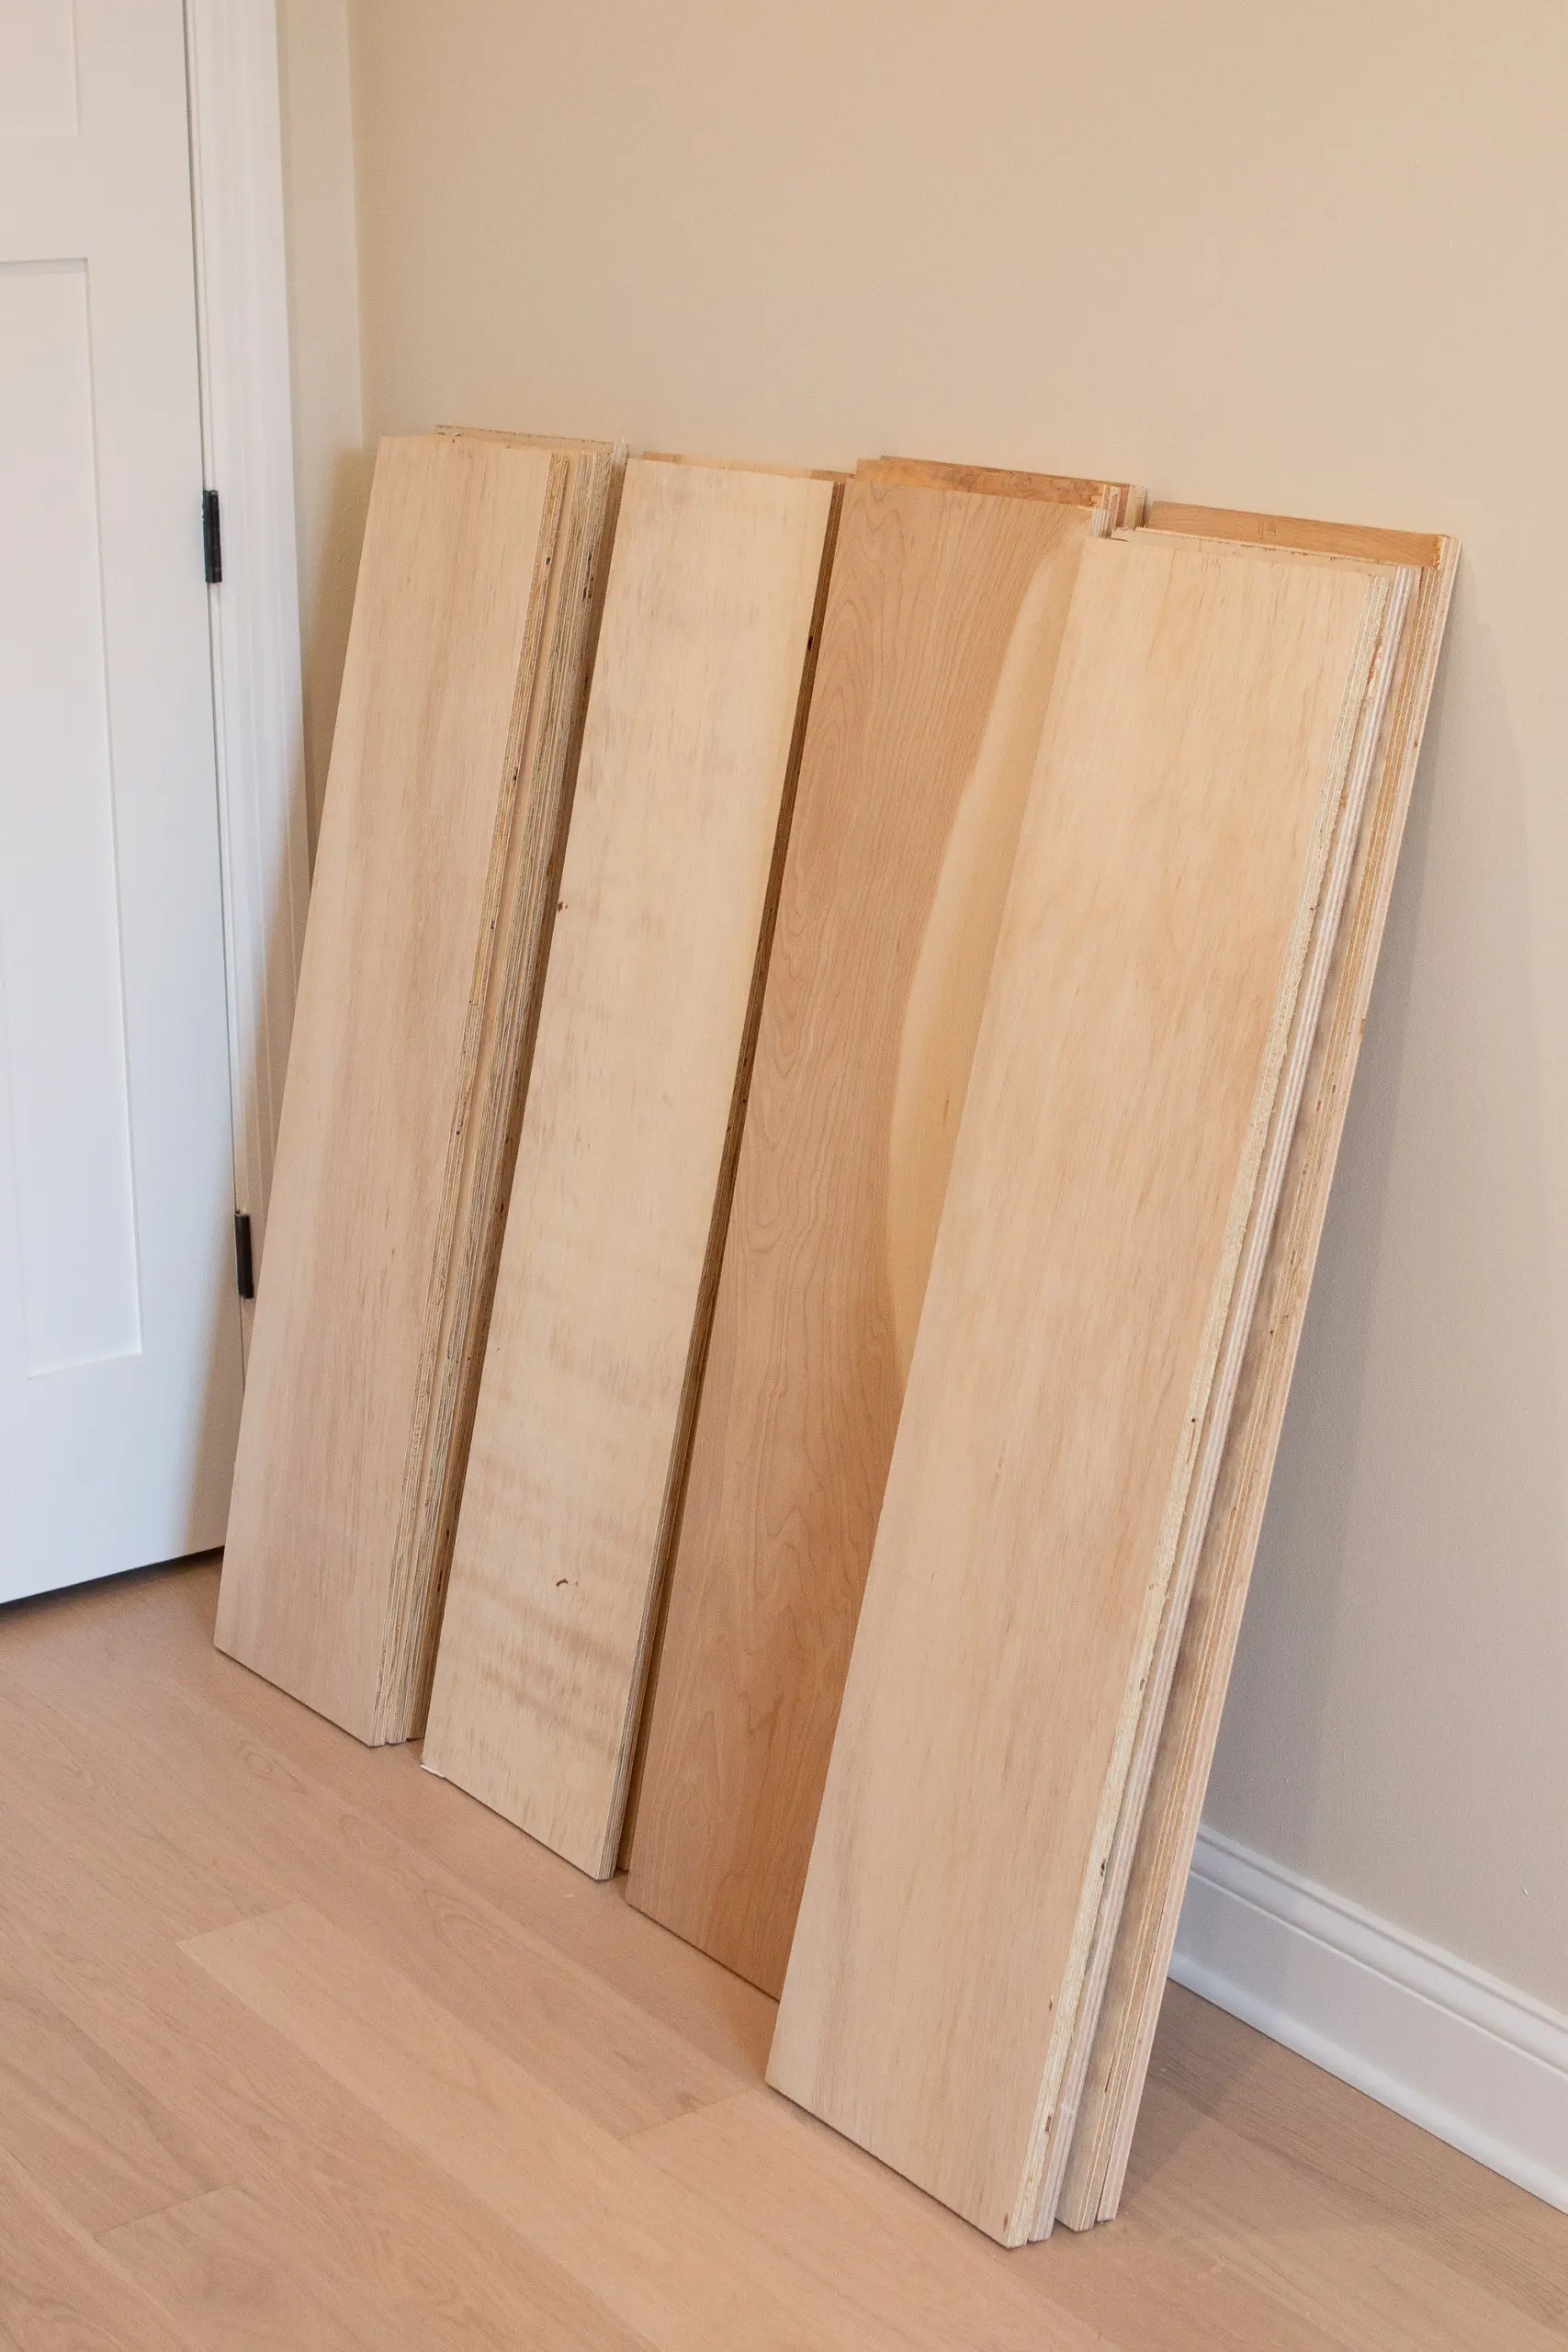 Using birch plywood for DIY bookshelves